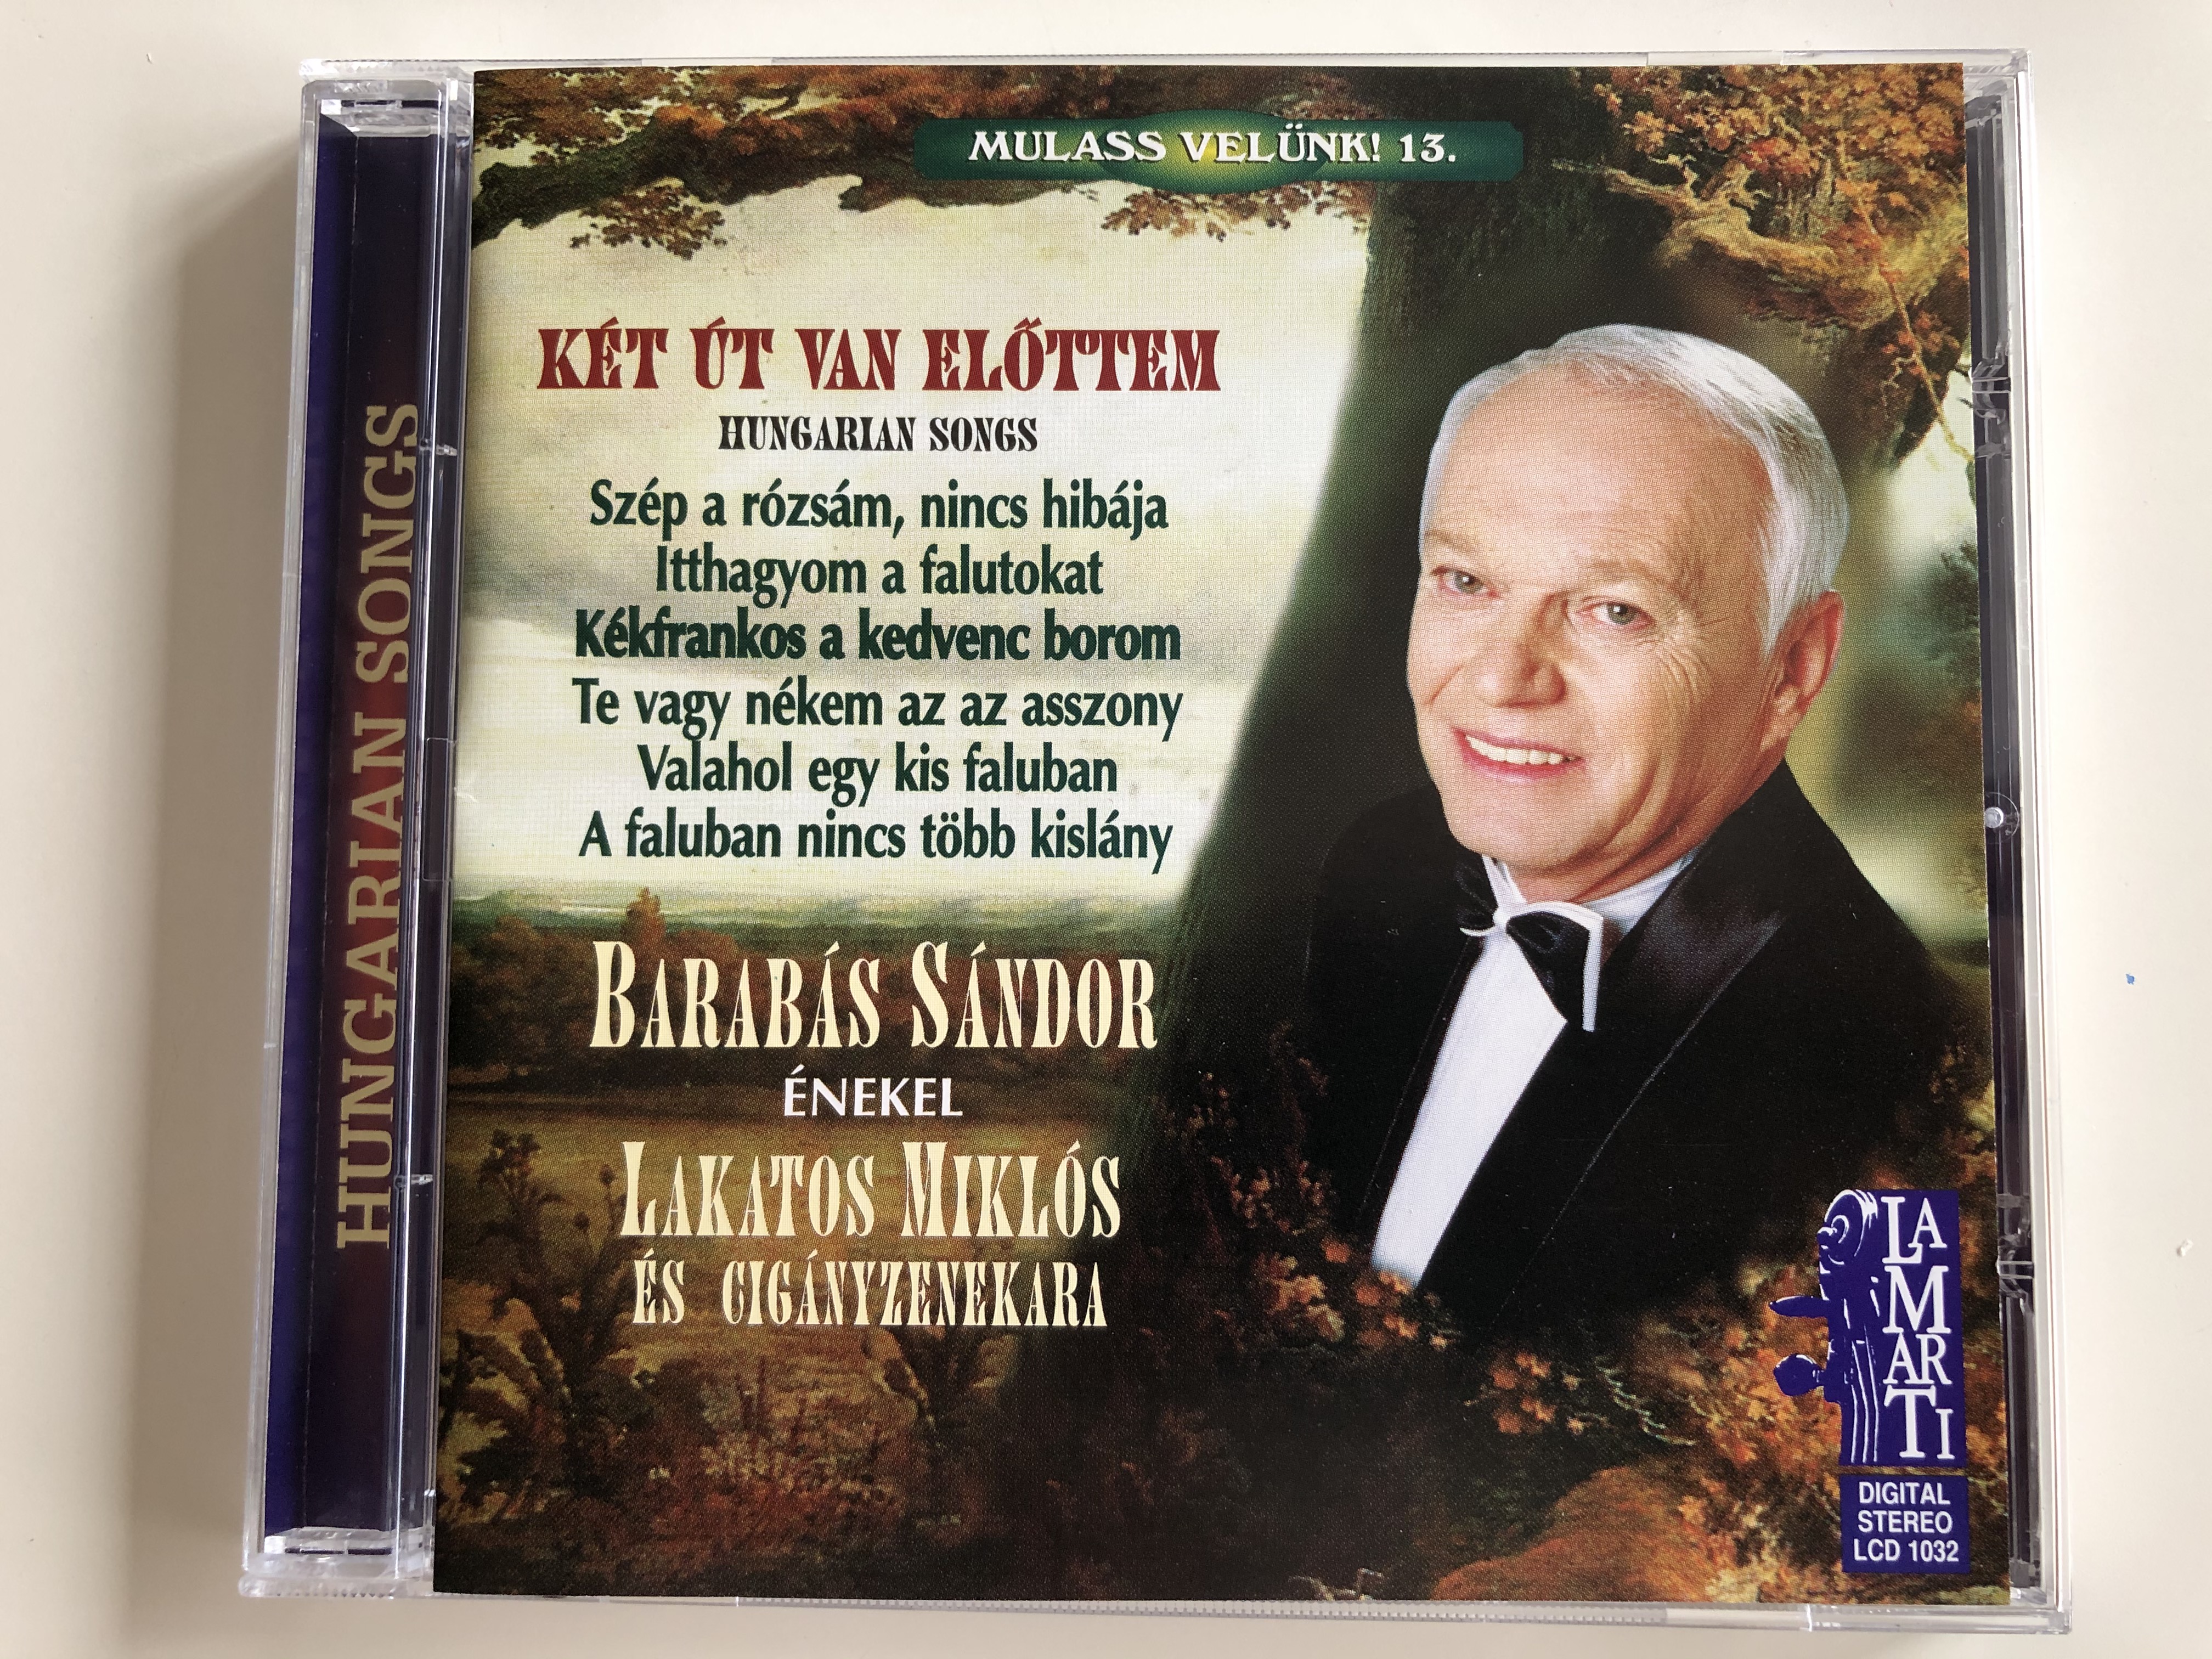 mulass-vel-nk-13.-ket-ut-van-elottem-hungarian-songs-barabas-sandor-enekel-lakatos-miklos-es-ciganyzenekara-lamarti-audio-cd-2001-stereo-lcd-1032-1-.jpg